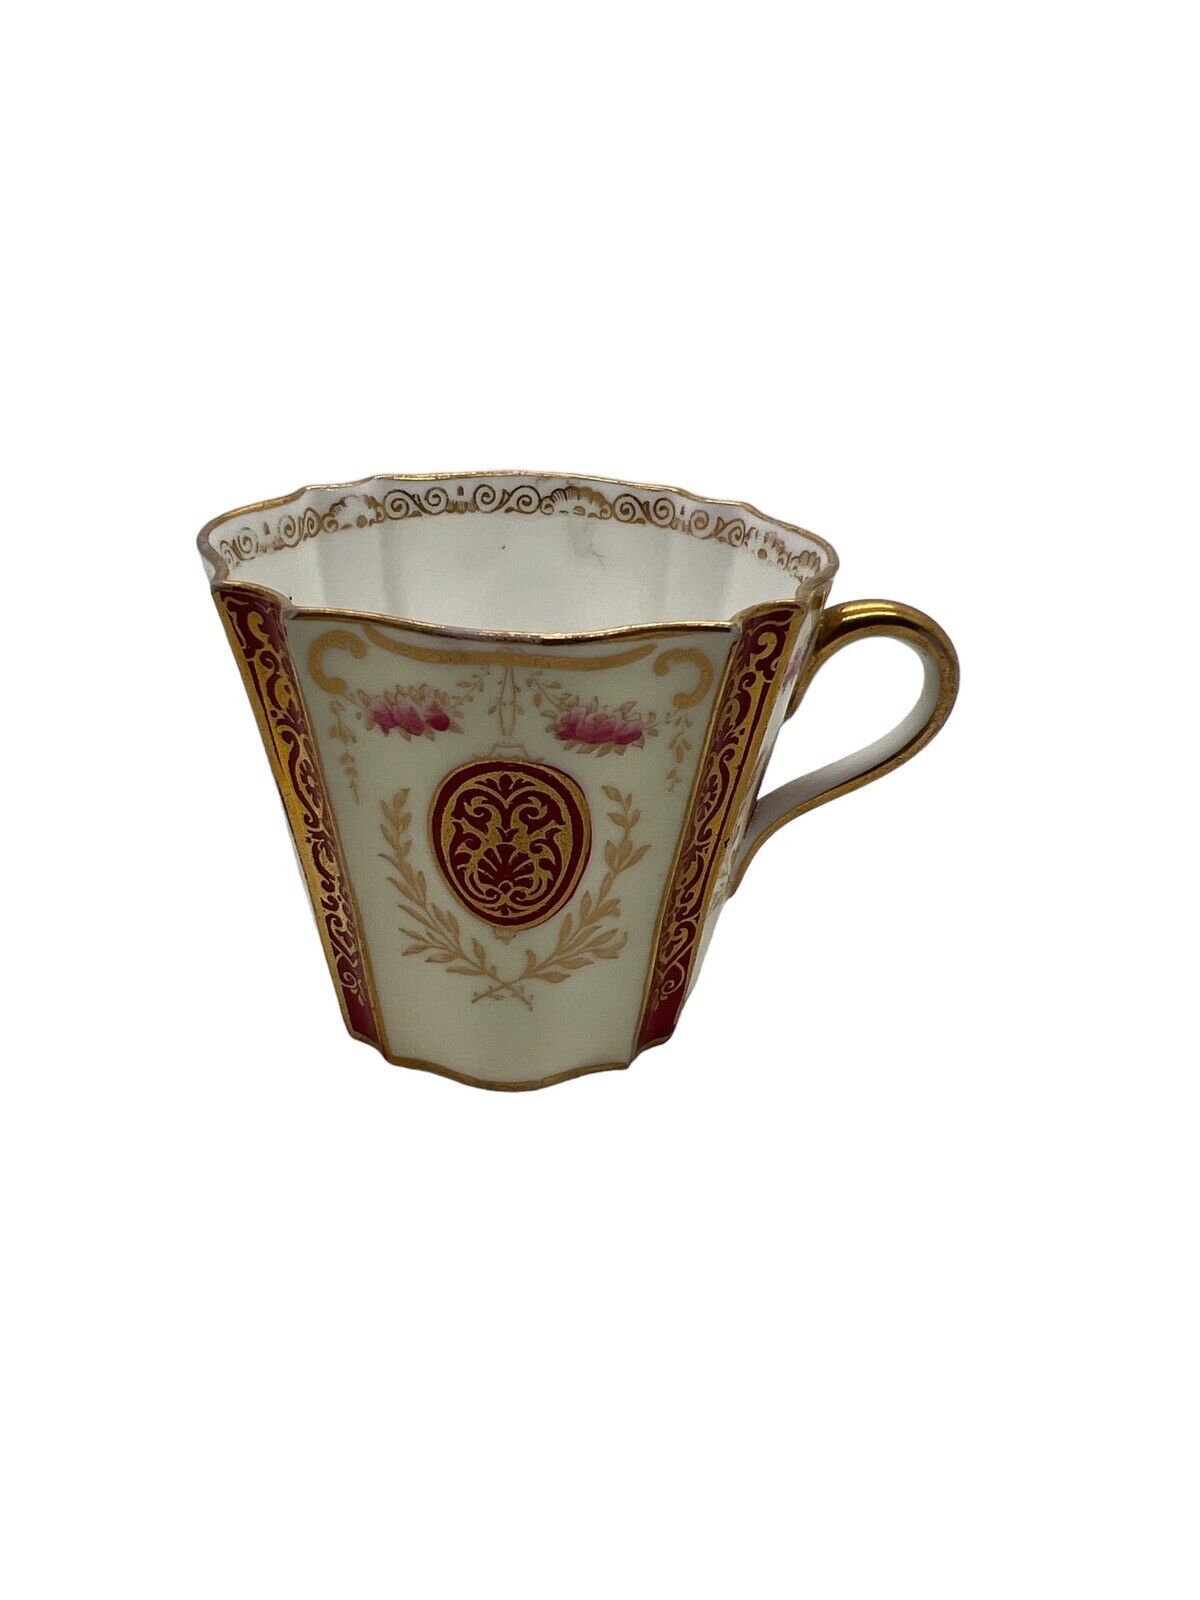 Antique Wedgwood Demitasse Cup -Edwardian Period